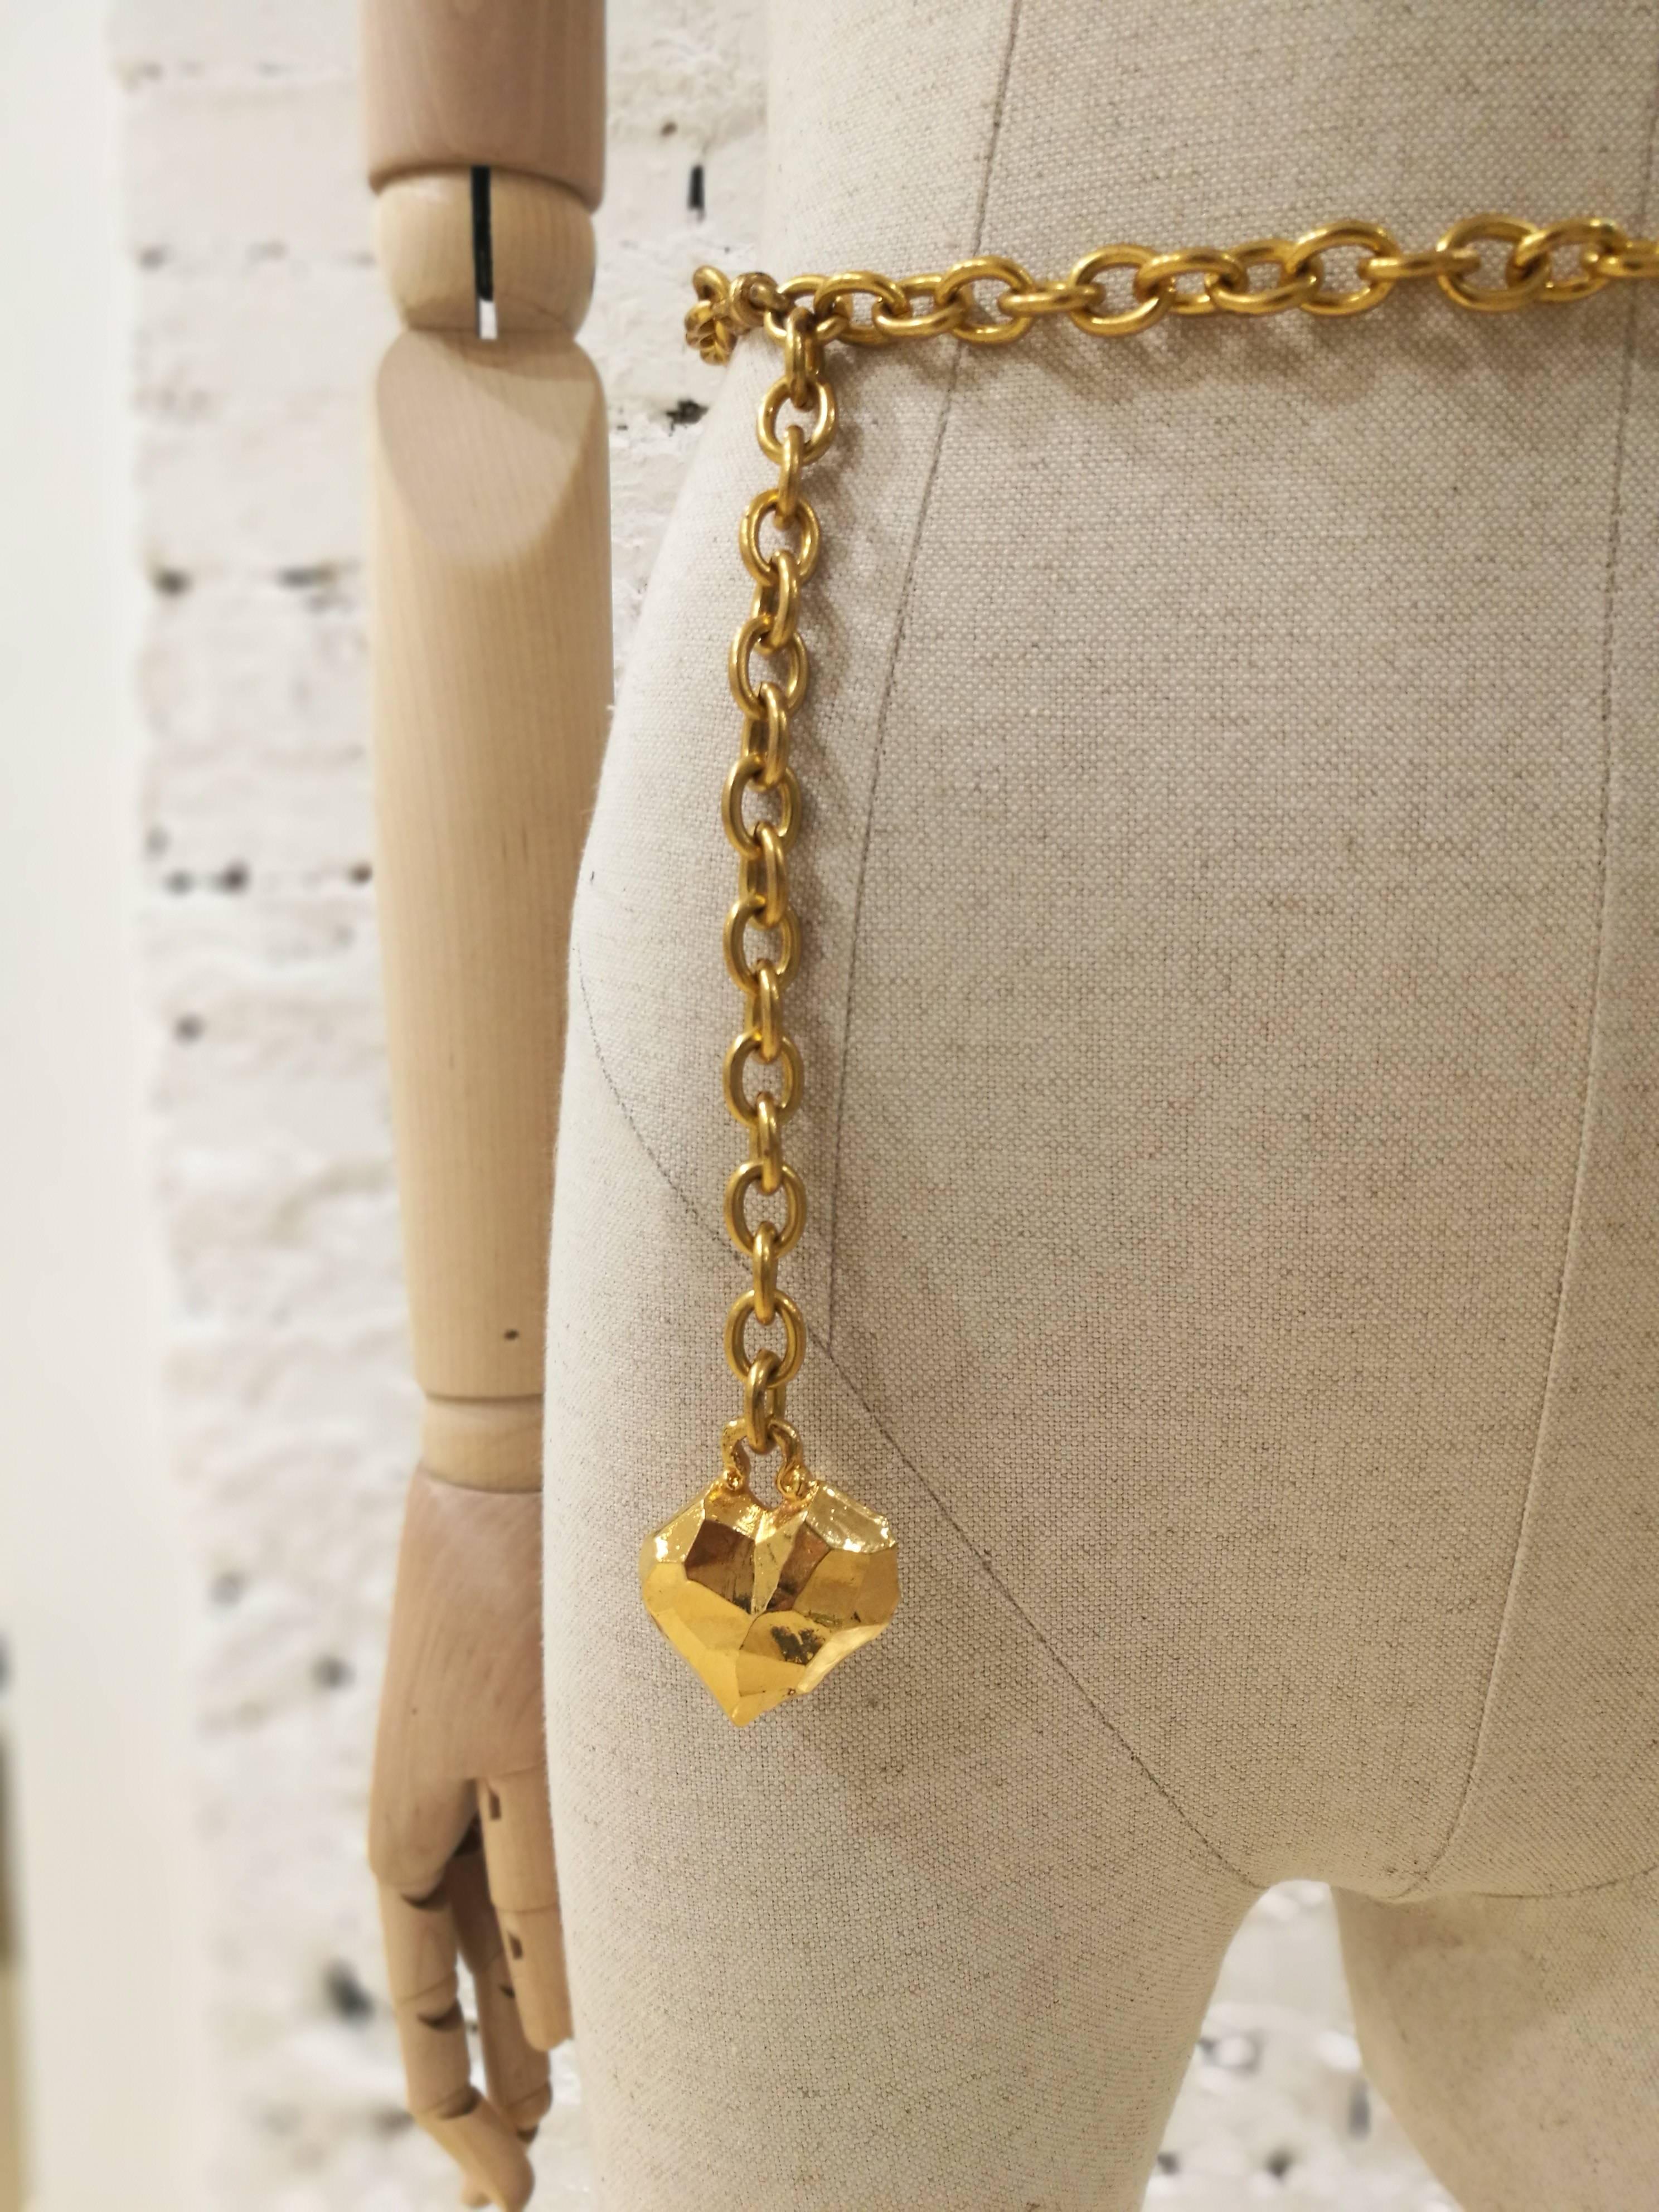 Sonia Rykiel gold tone heart pendant belt/necklace 

total lenght 85 cm